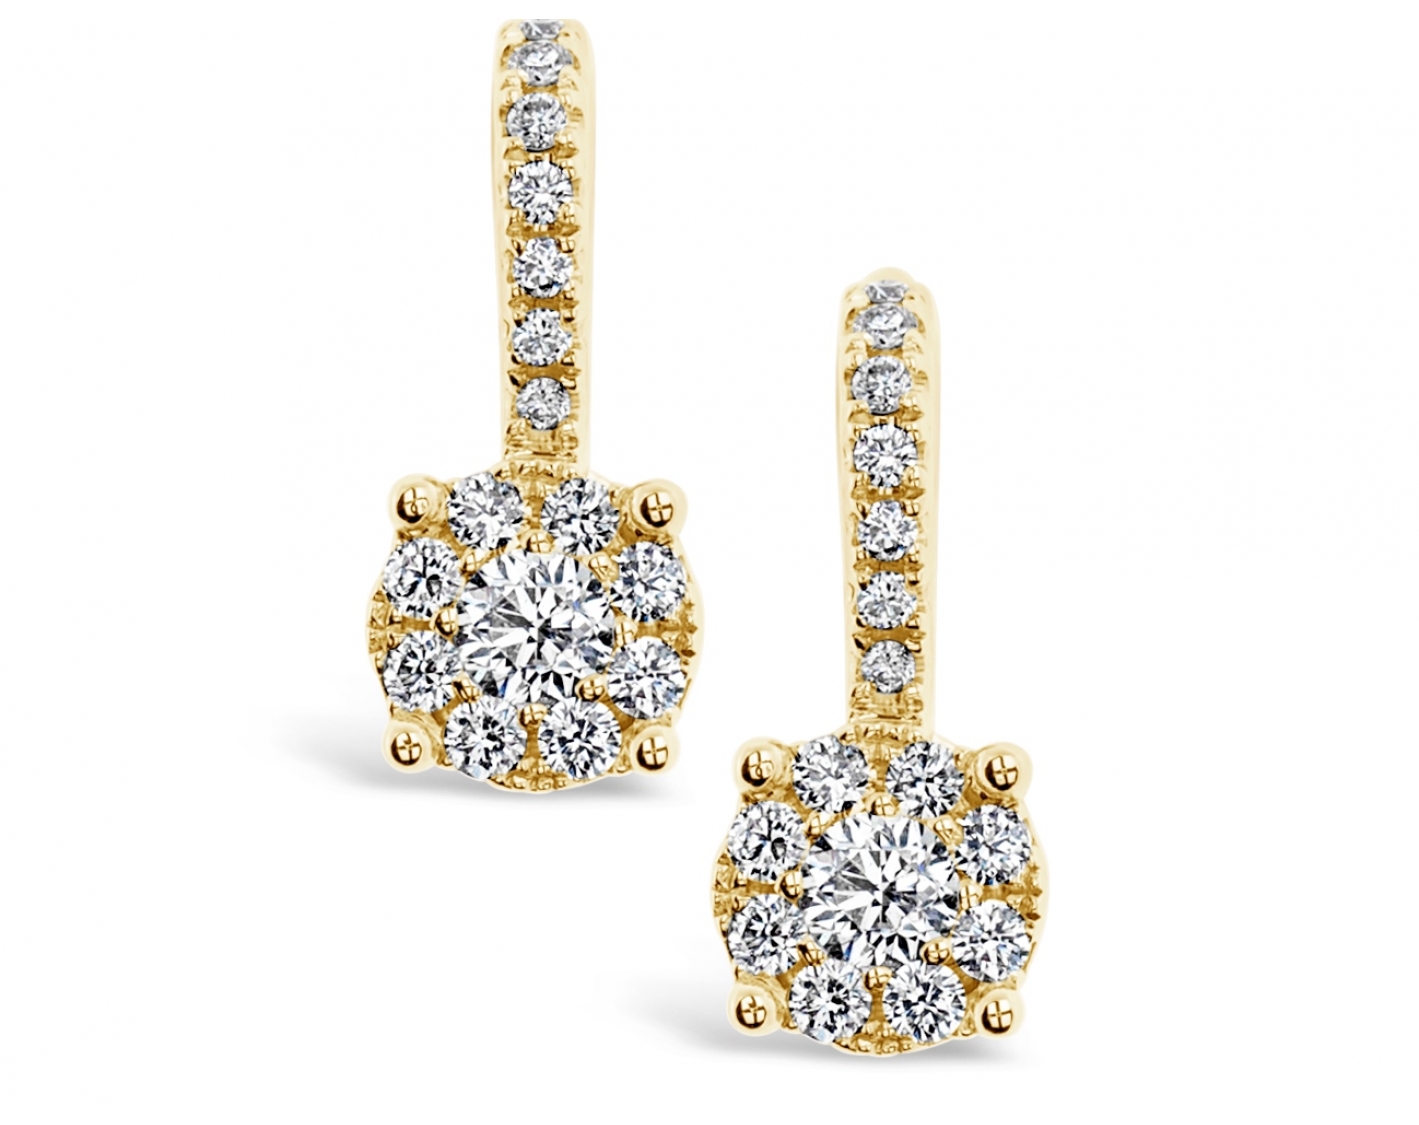 18k yellow gold halo illusion set diamond earrings with upstones Photos & images